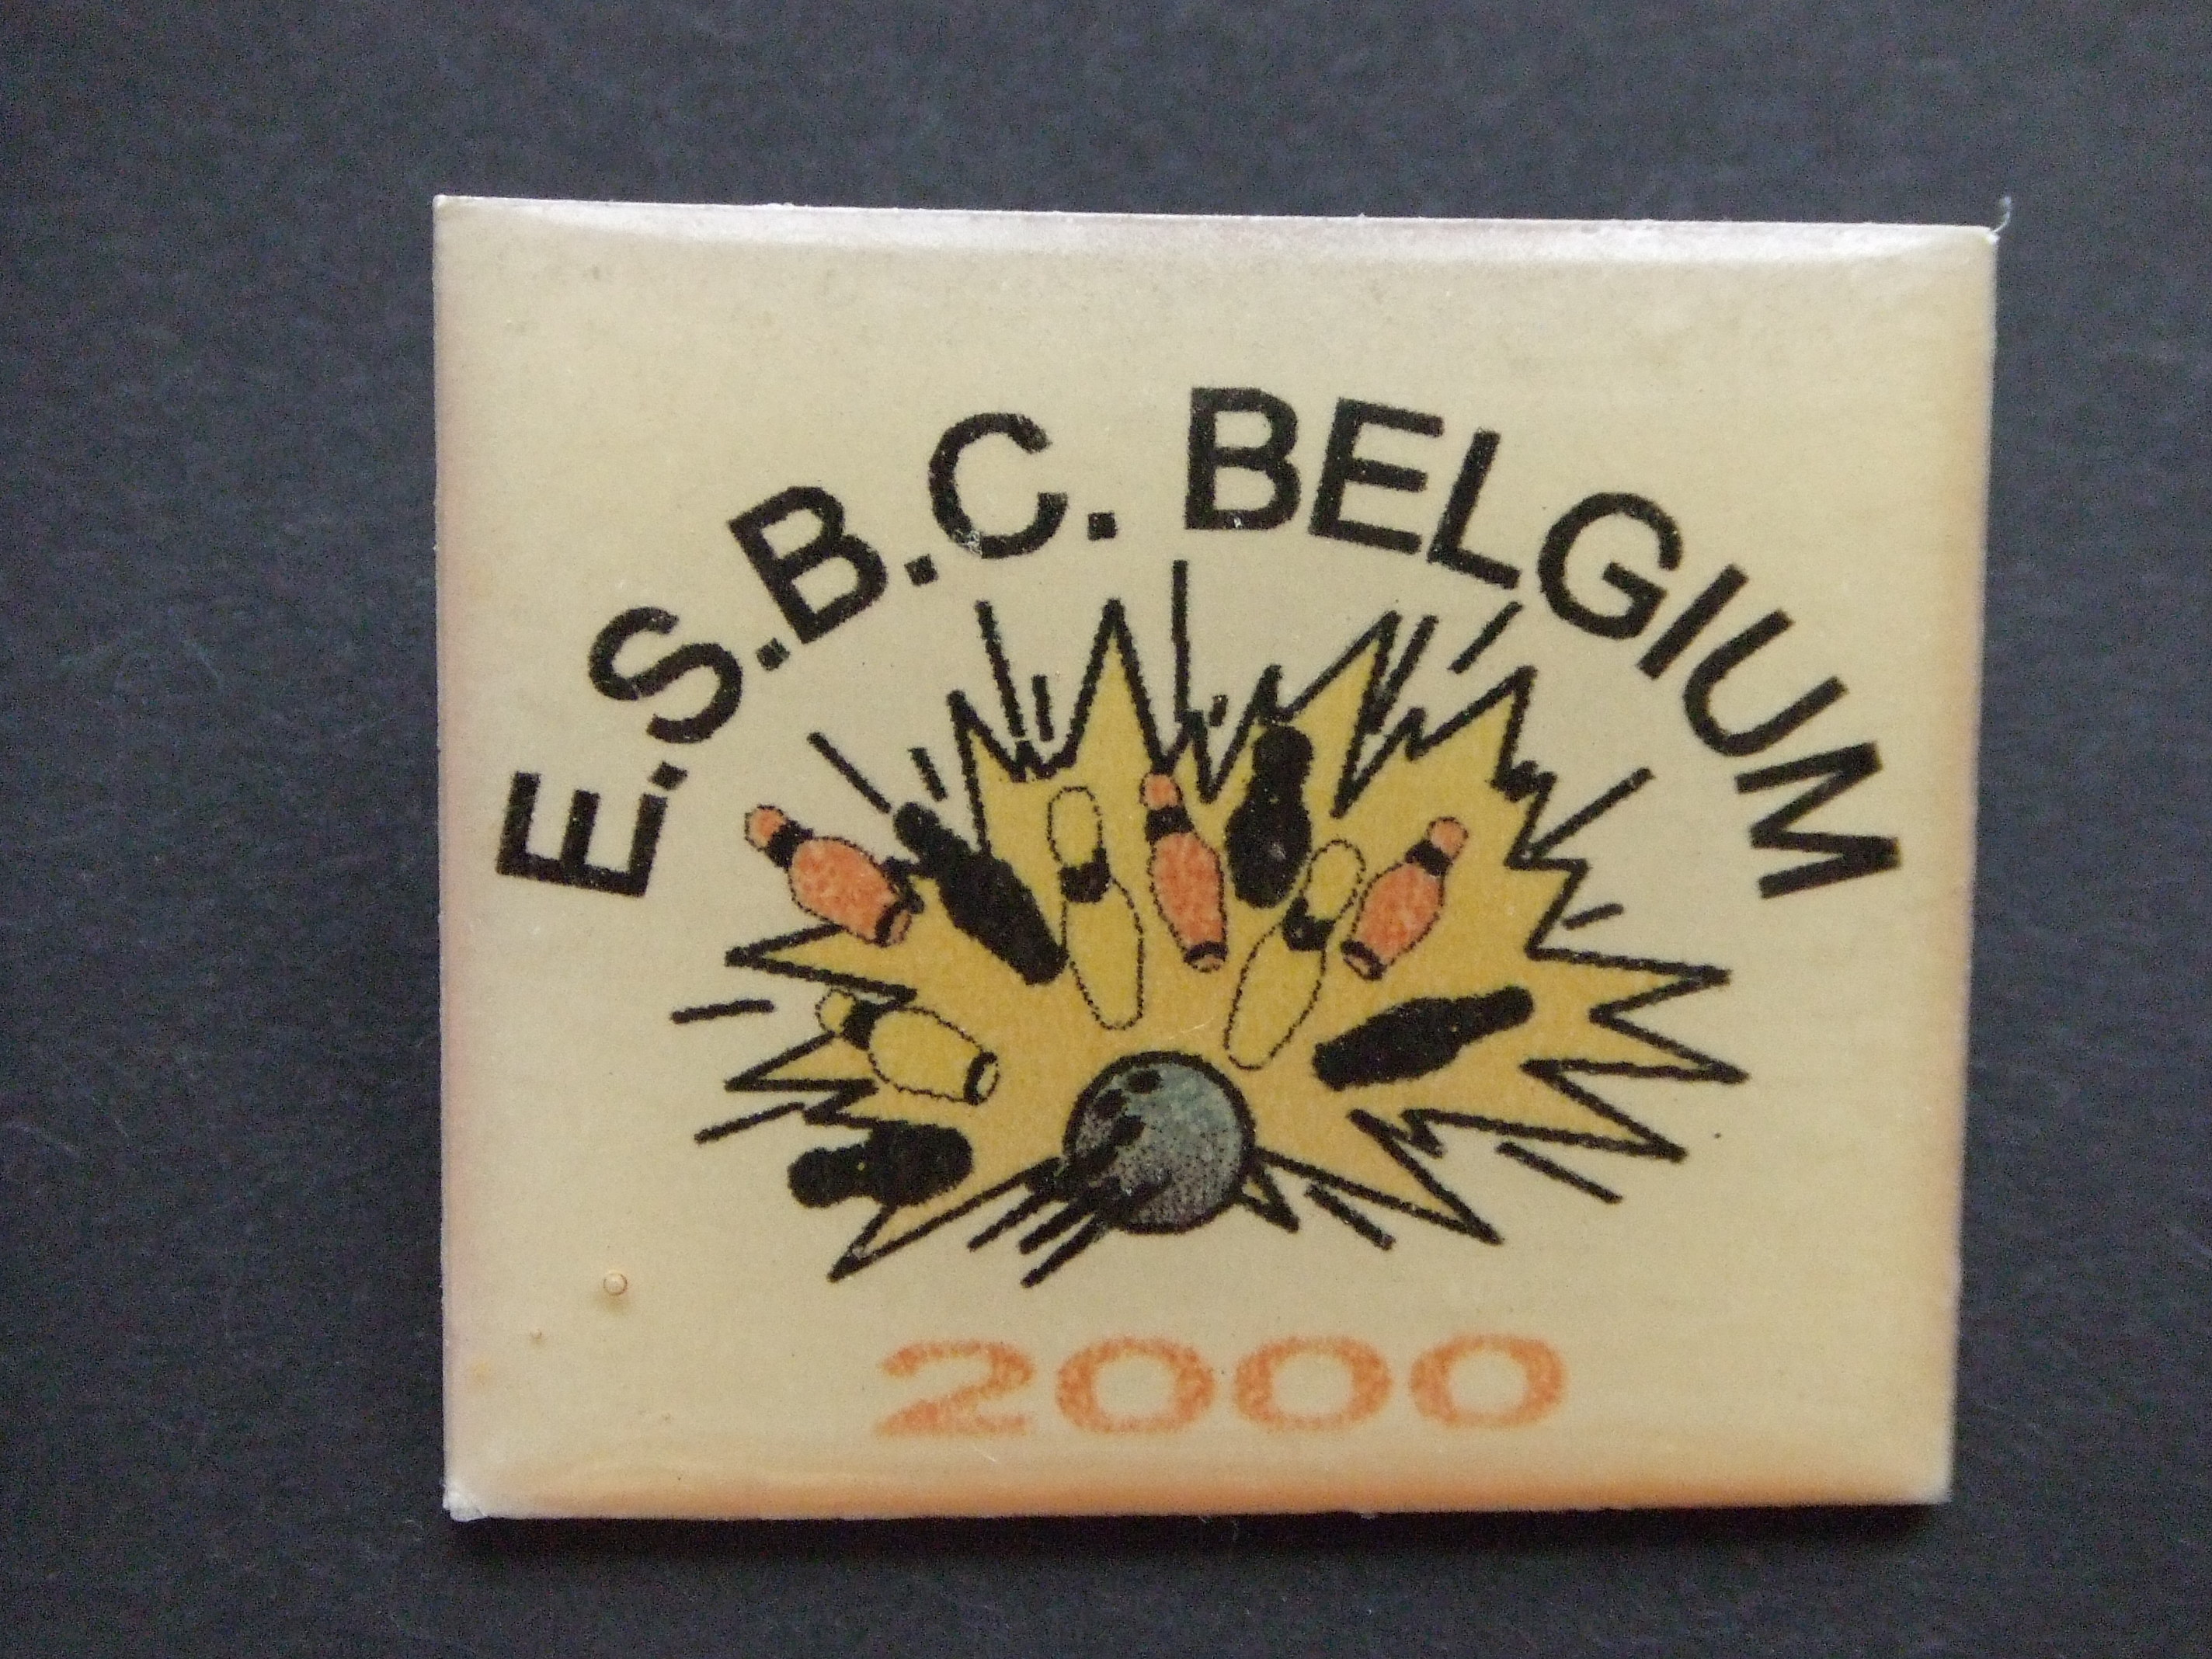 Bowling ESBC Belgie 2000